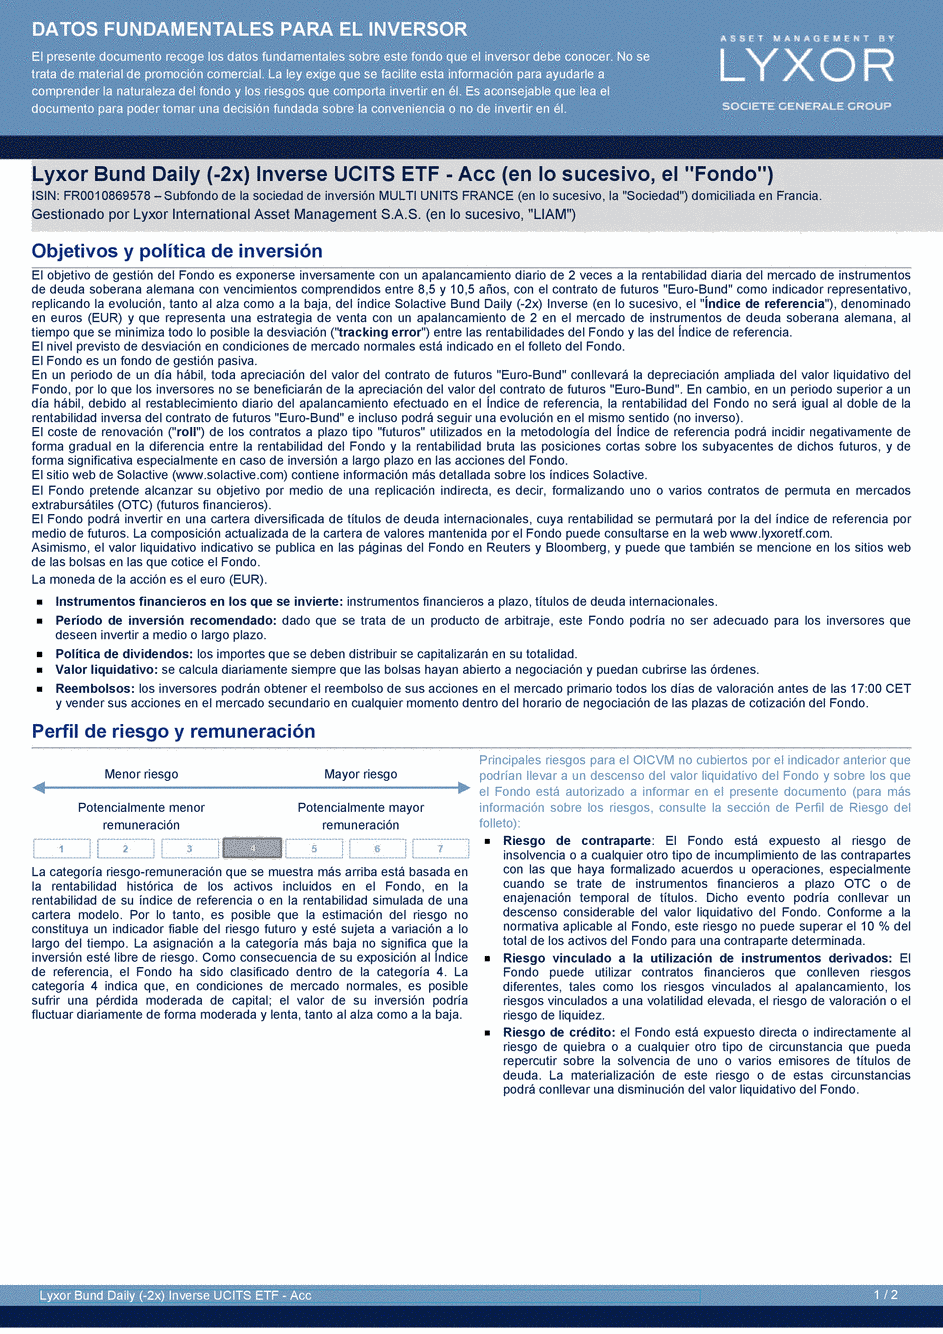 DICI Lyxor Bund Daily (-2x) Inverse UCITS ETF - Acc - 21/06/2019 - Espagnol